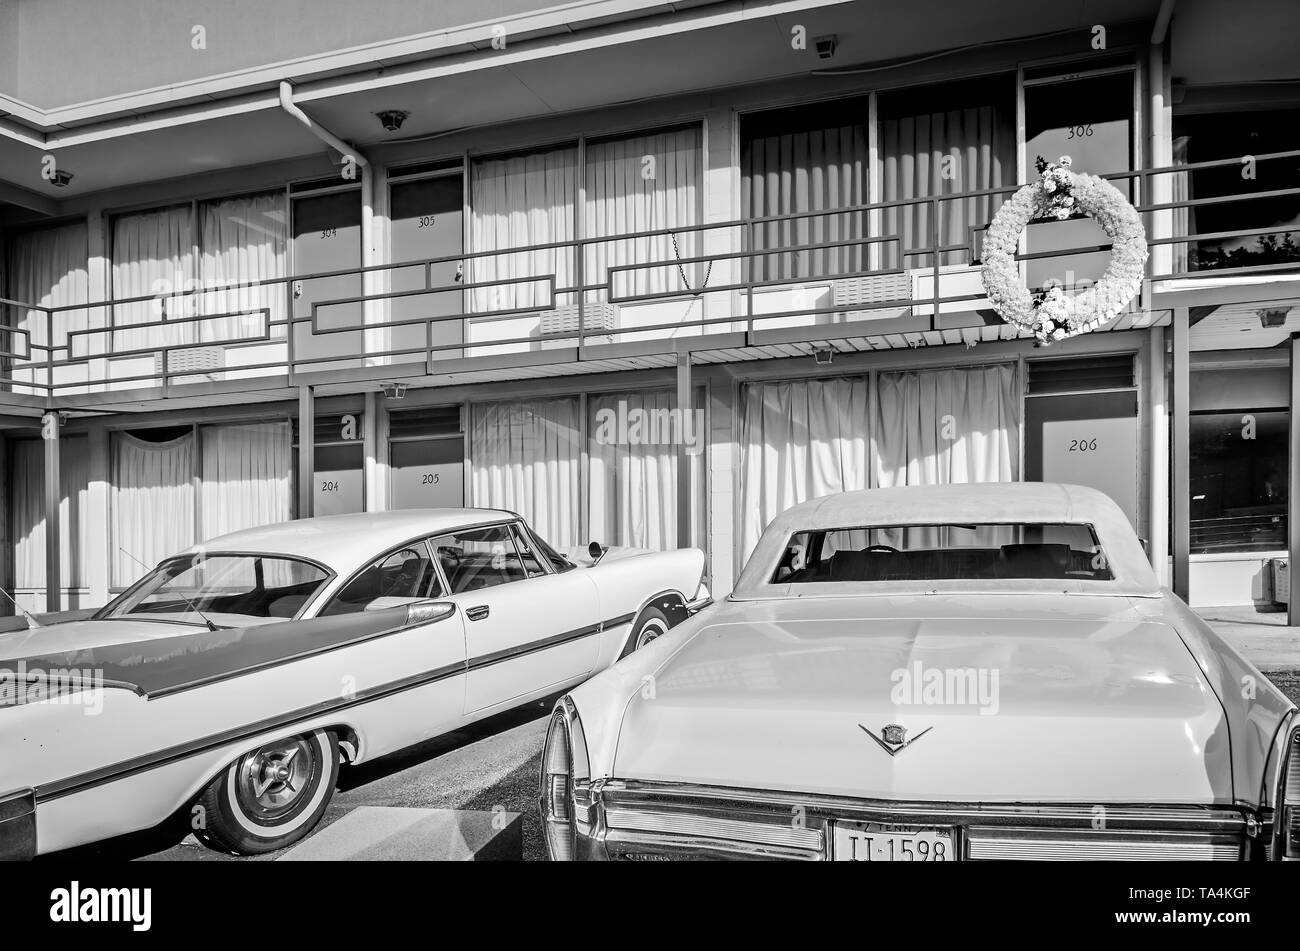 Zimmer 306 an der Lorraine Motel wird dargestellt, Sept. 7, 2015, in Memphis, Tennessee. Civil Rights leader Dr. Martin Luther King Jr. ermordet wurde. Stockfoto